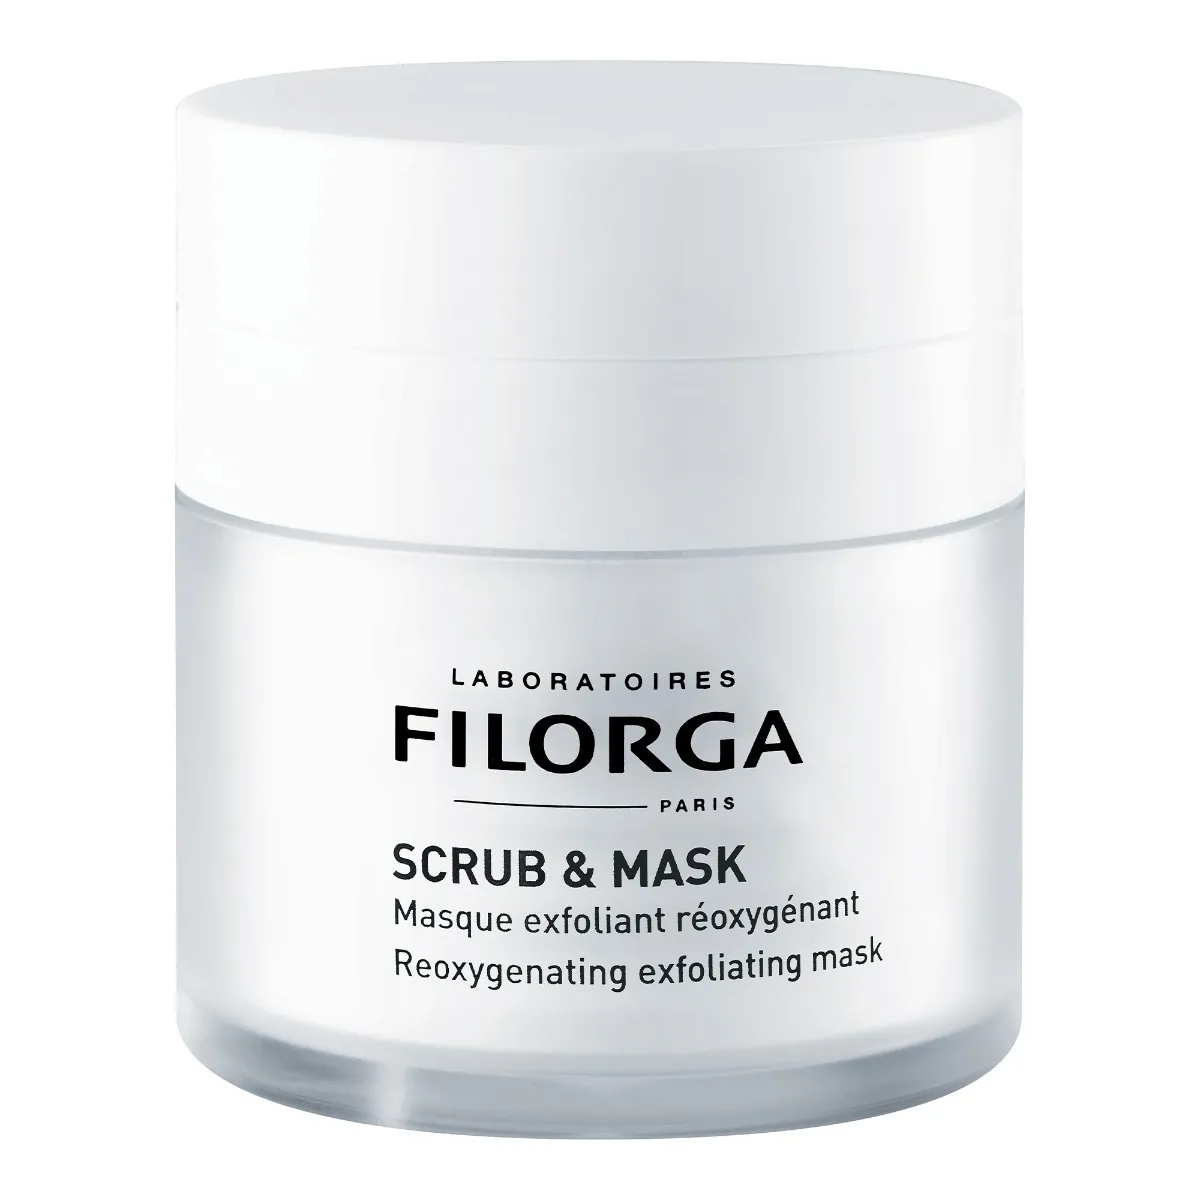 Filorga Scrub & Mask 55 ml Maschera Esfoliante Riossigenante